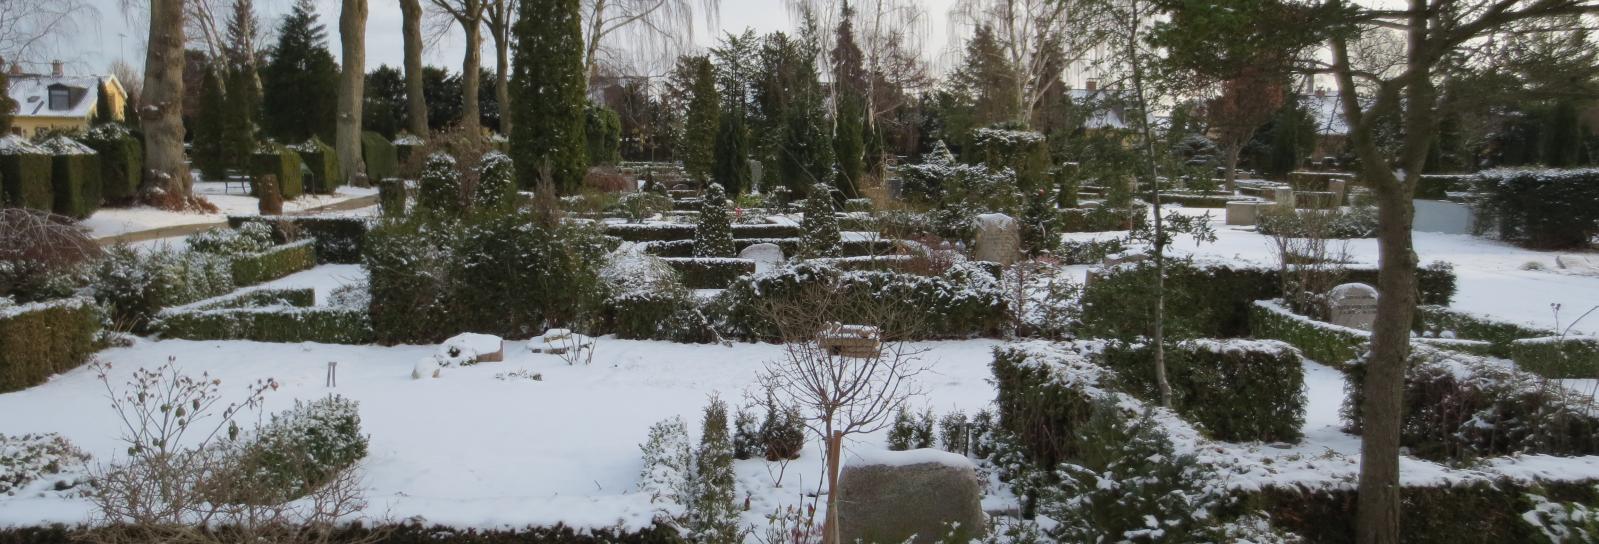 Kirkegård i sne